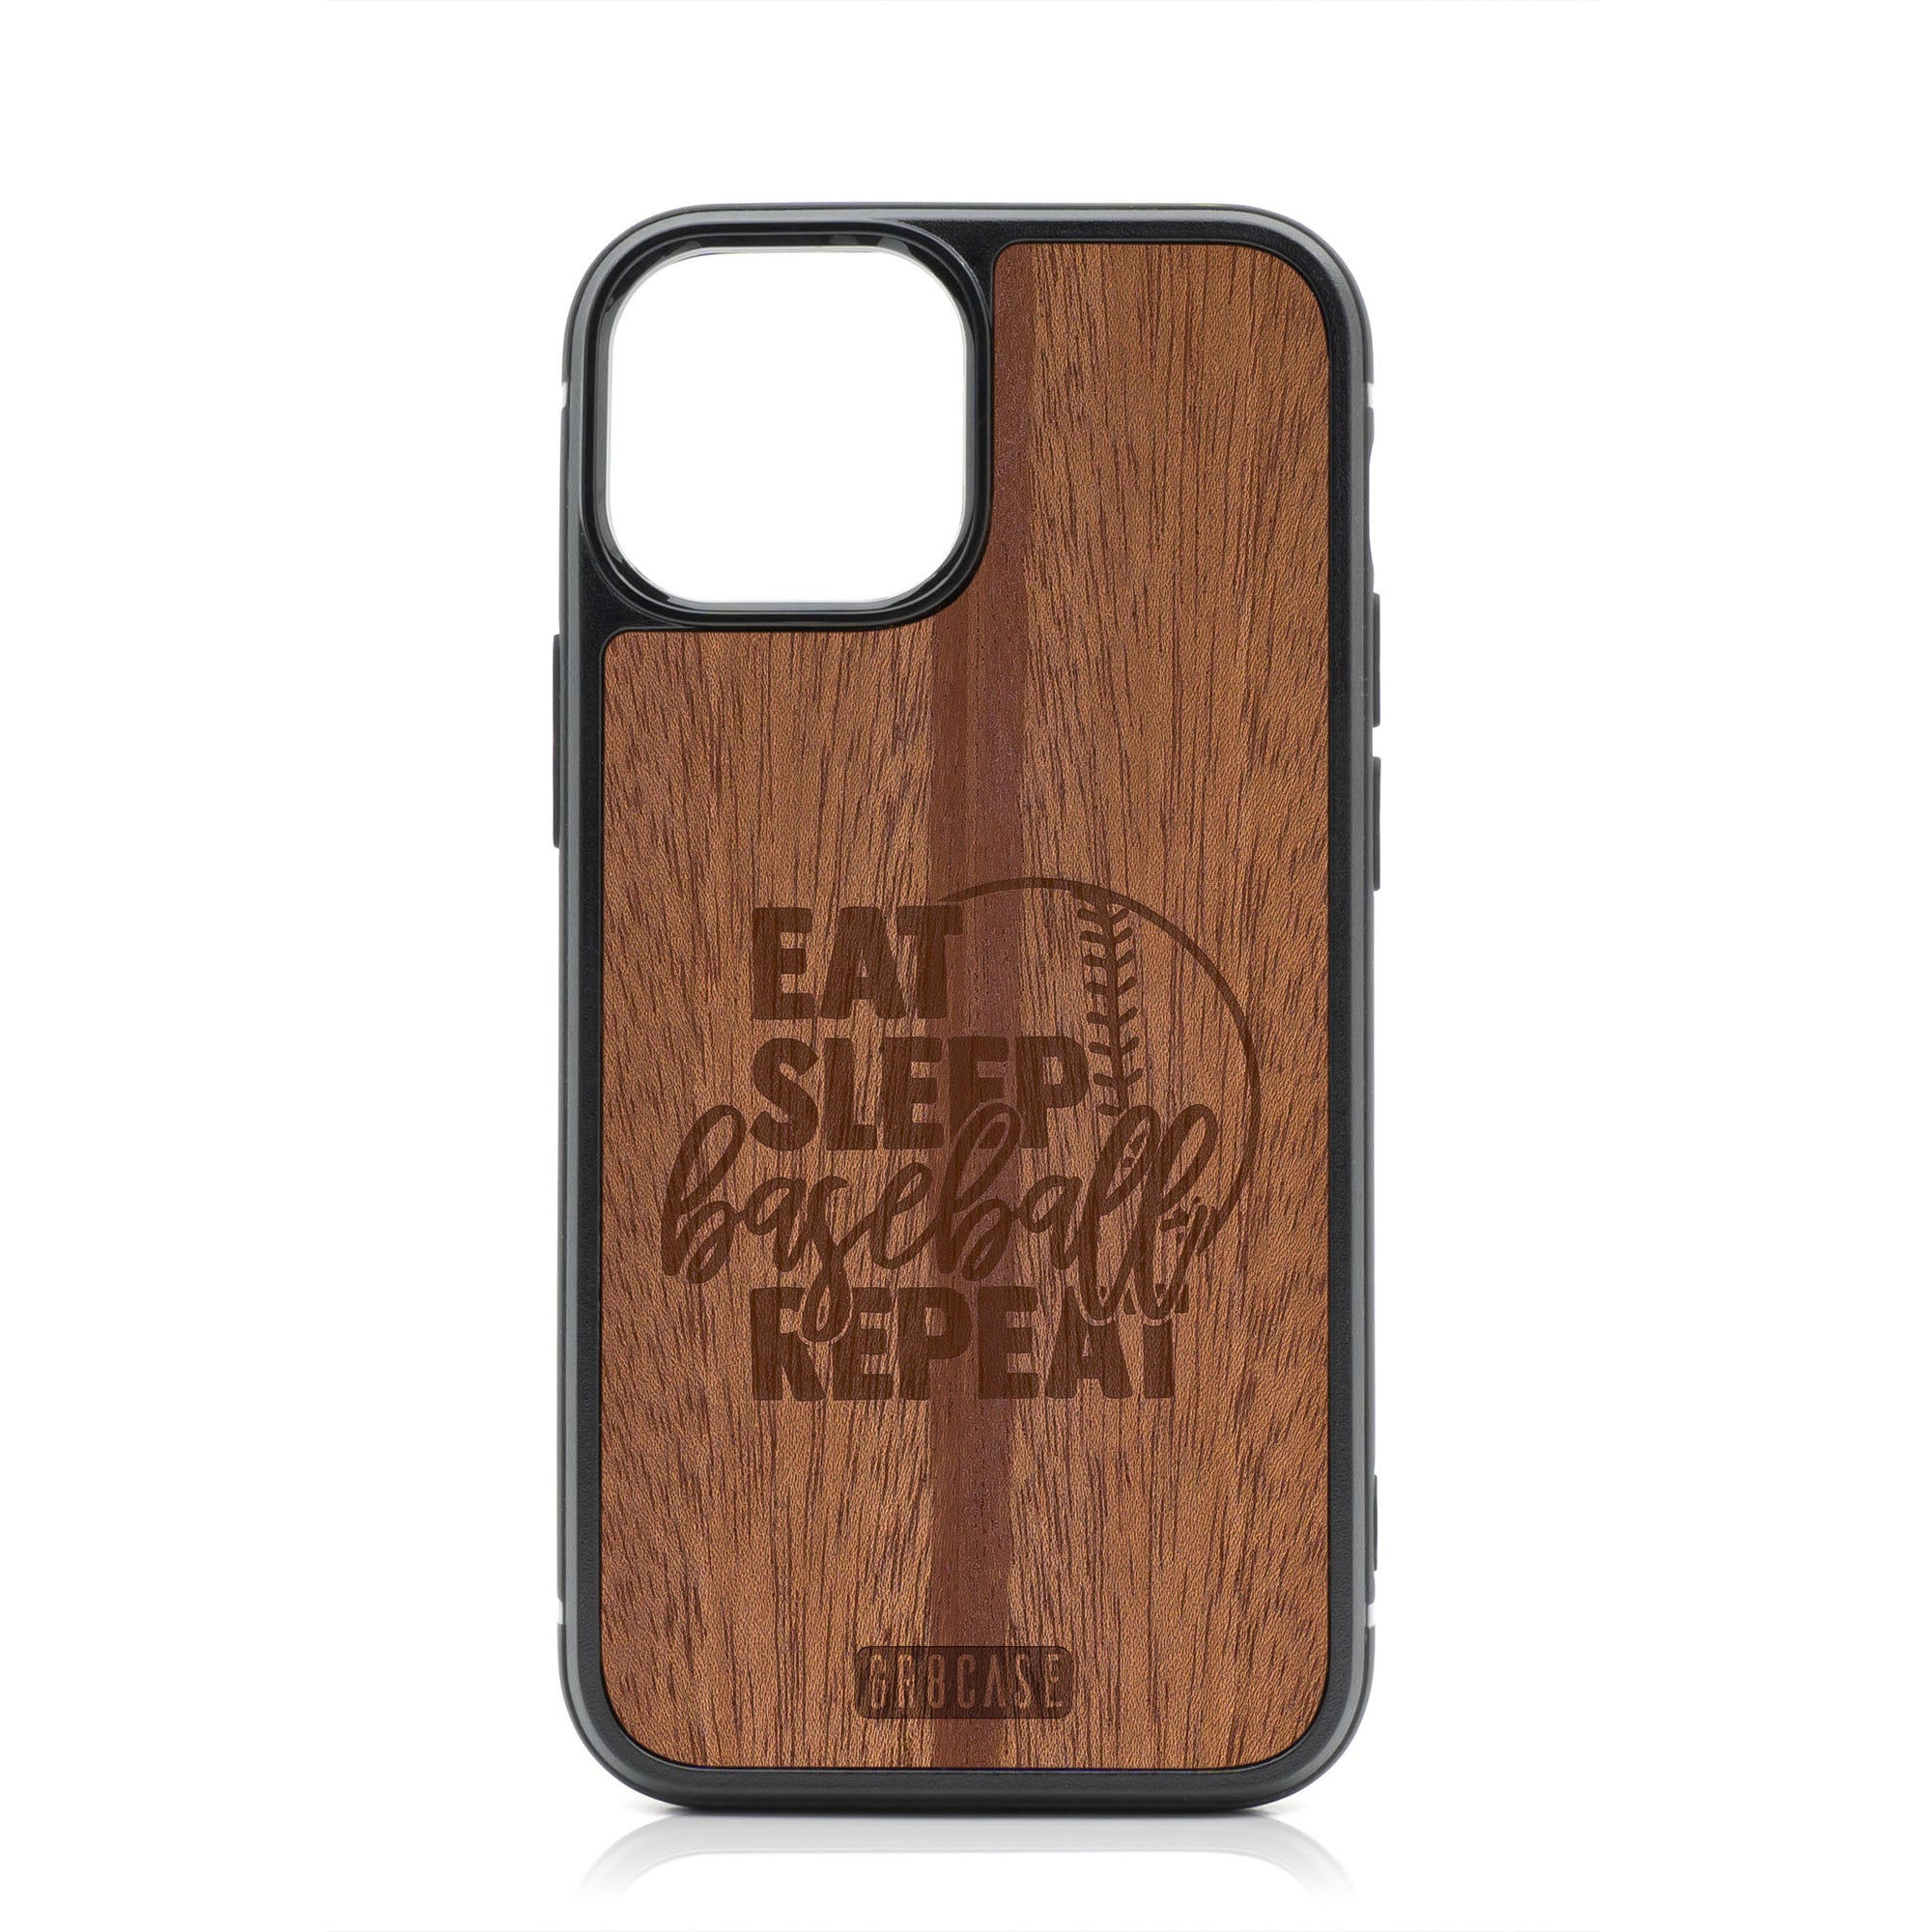 Eat Sleep Baseball Repeat Design Wood Case For iPhone 13 Mini